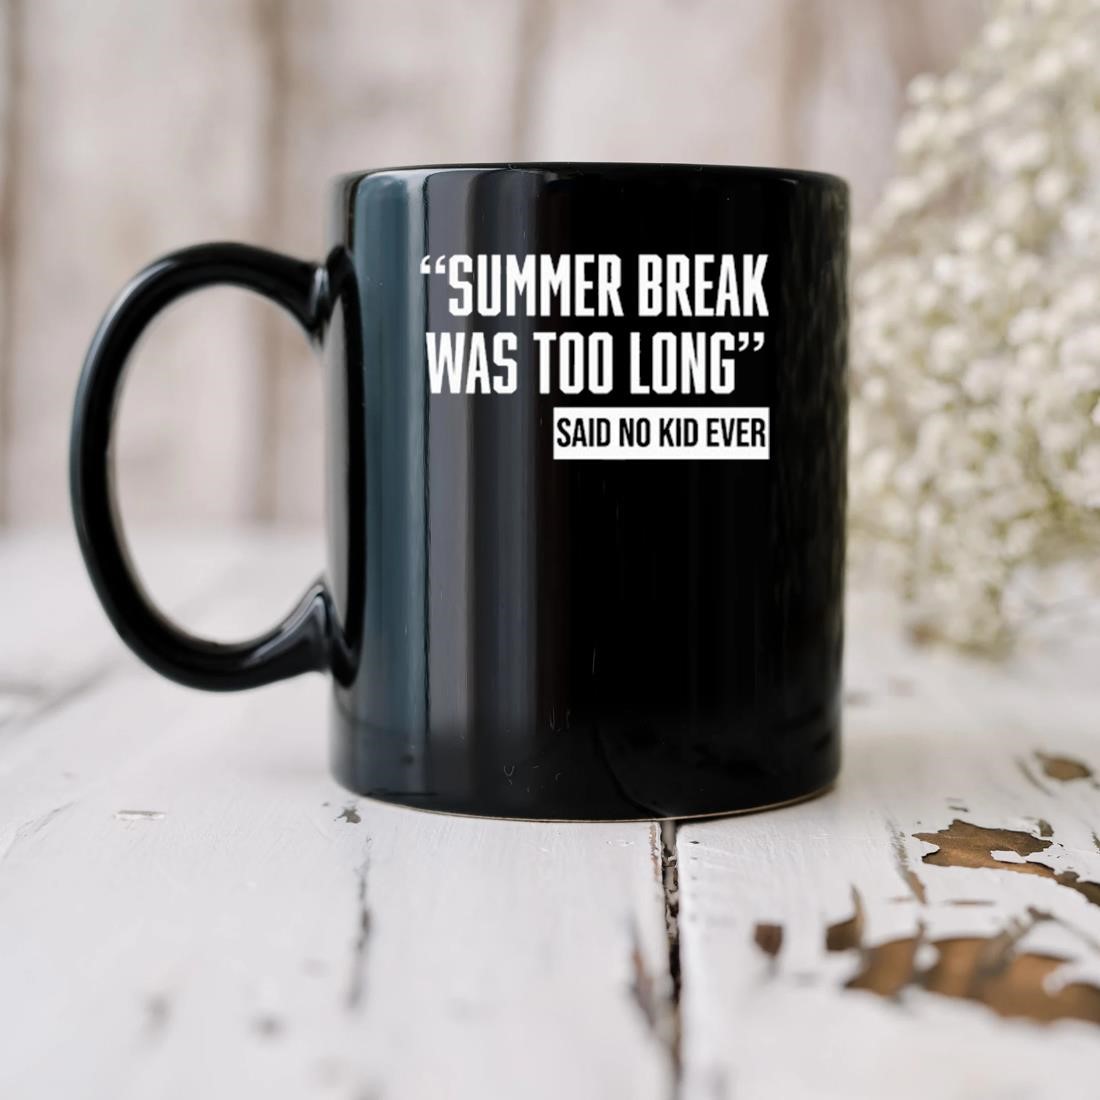 Summer Break Was Too Long Sad No Kid Ever Mug biu.jpg